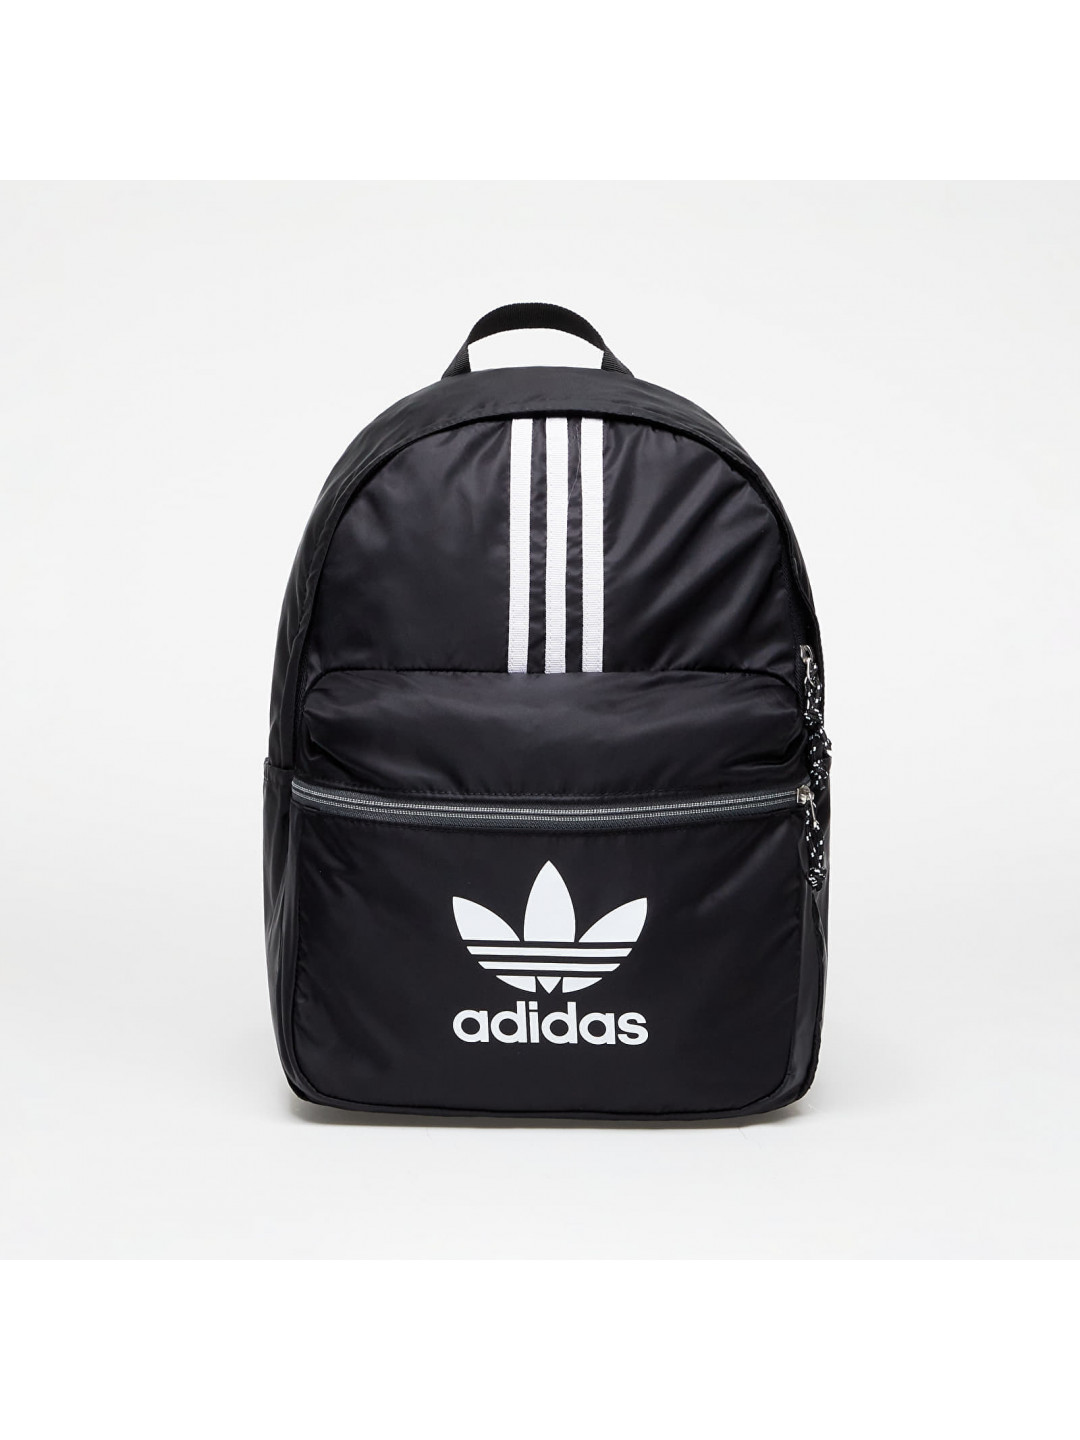 Adidas Adicolor Archive Backpack Black Black